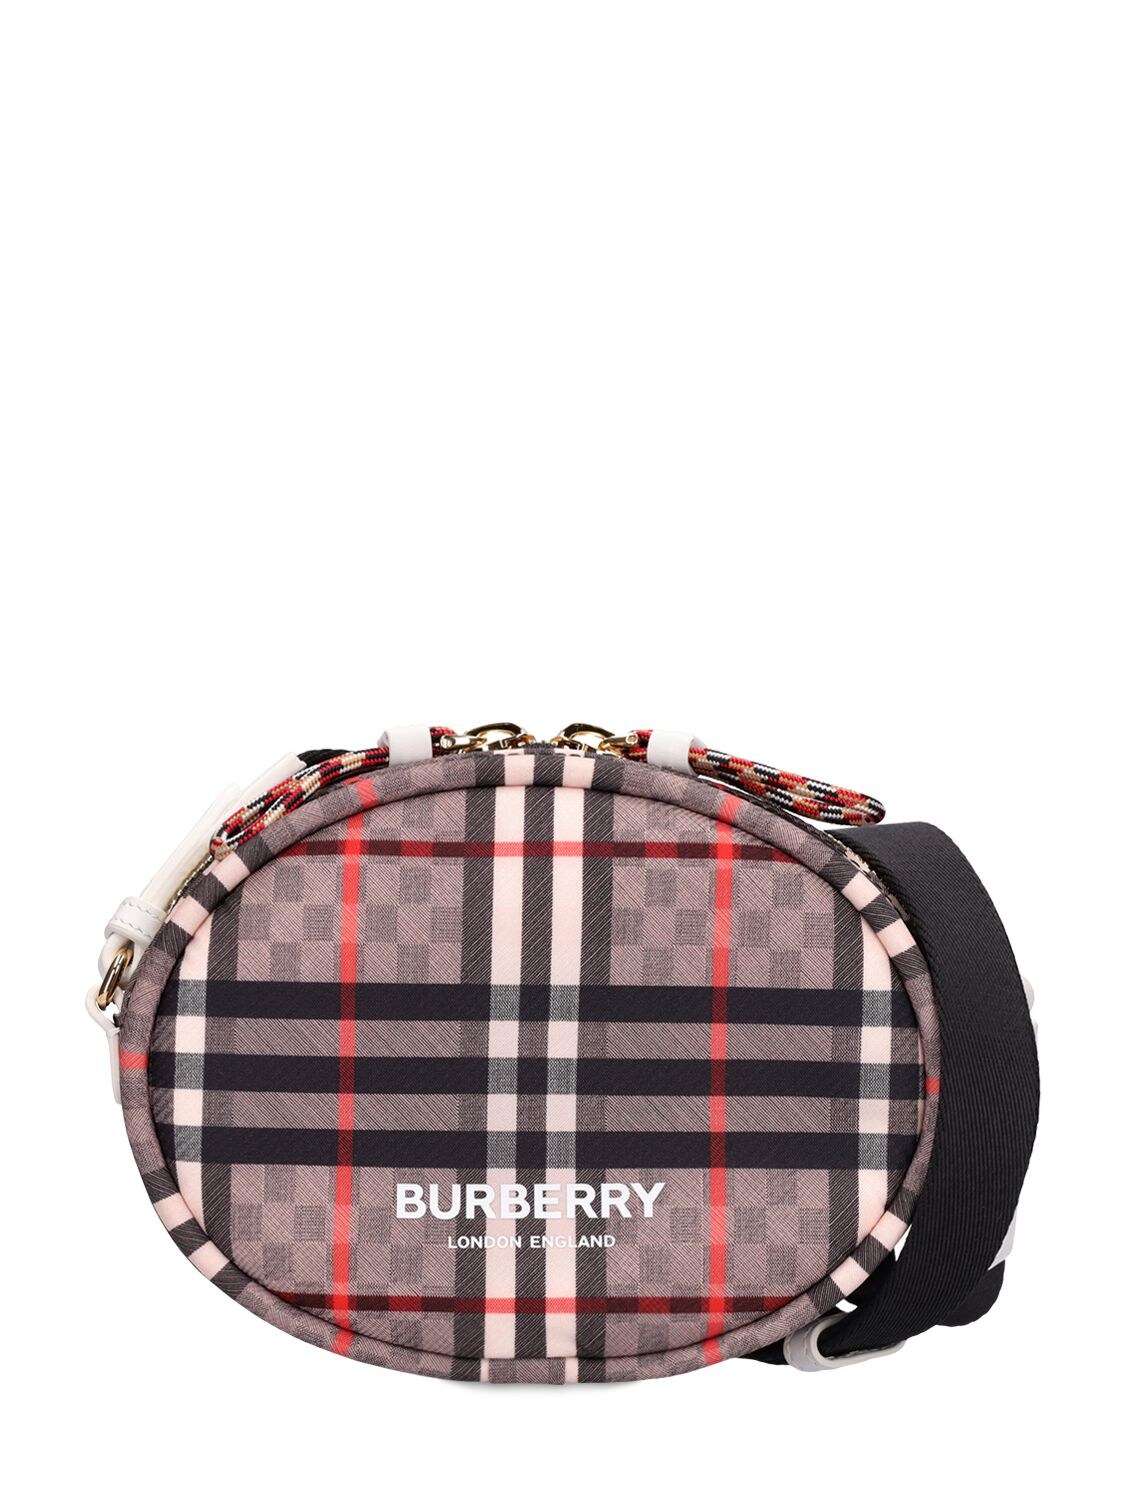 BURBERRY Bags for Kids | ModeSens